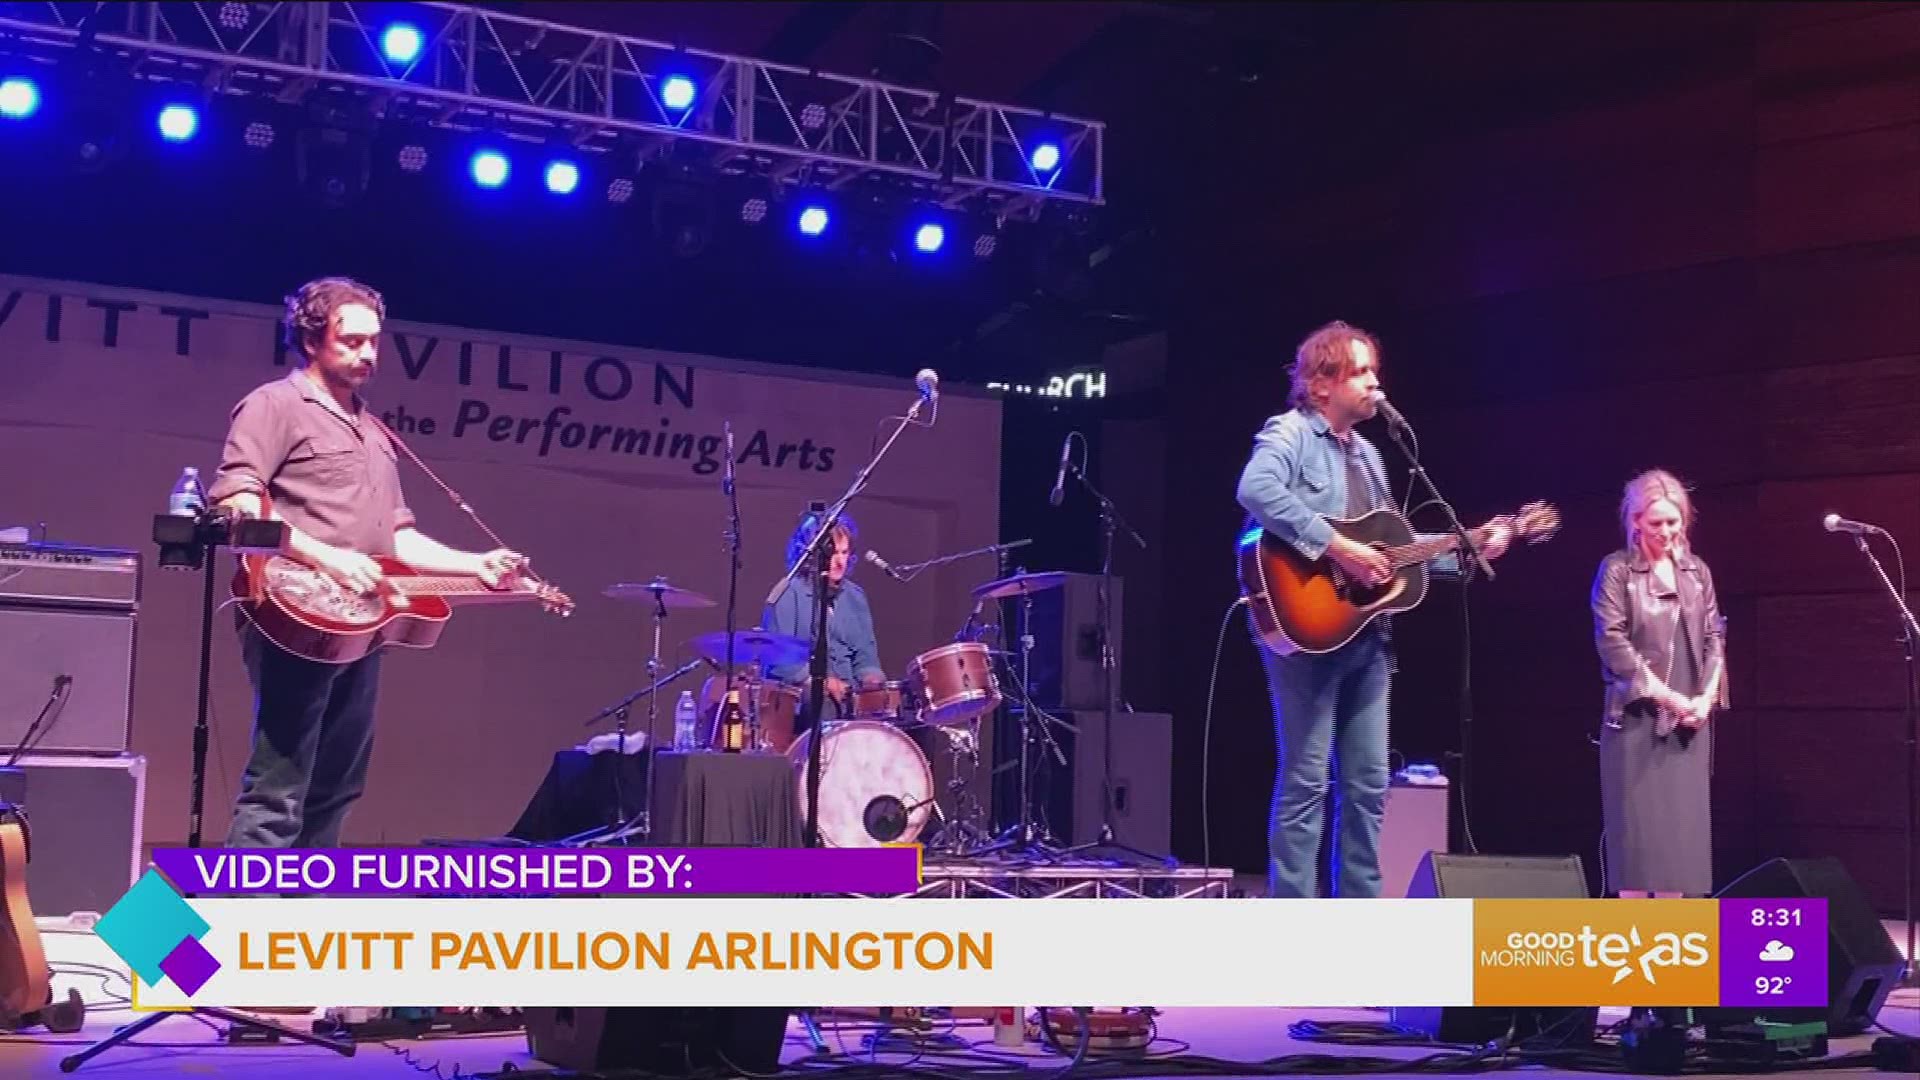 This segment is sponsored by: Levitt Pavilion Arlington